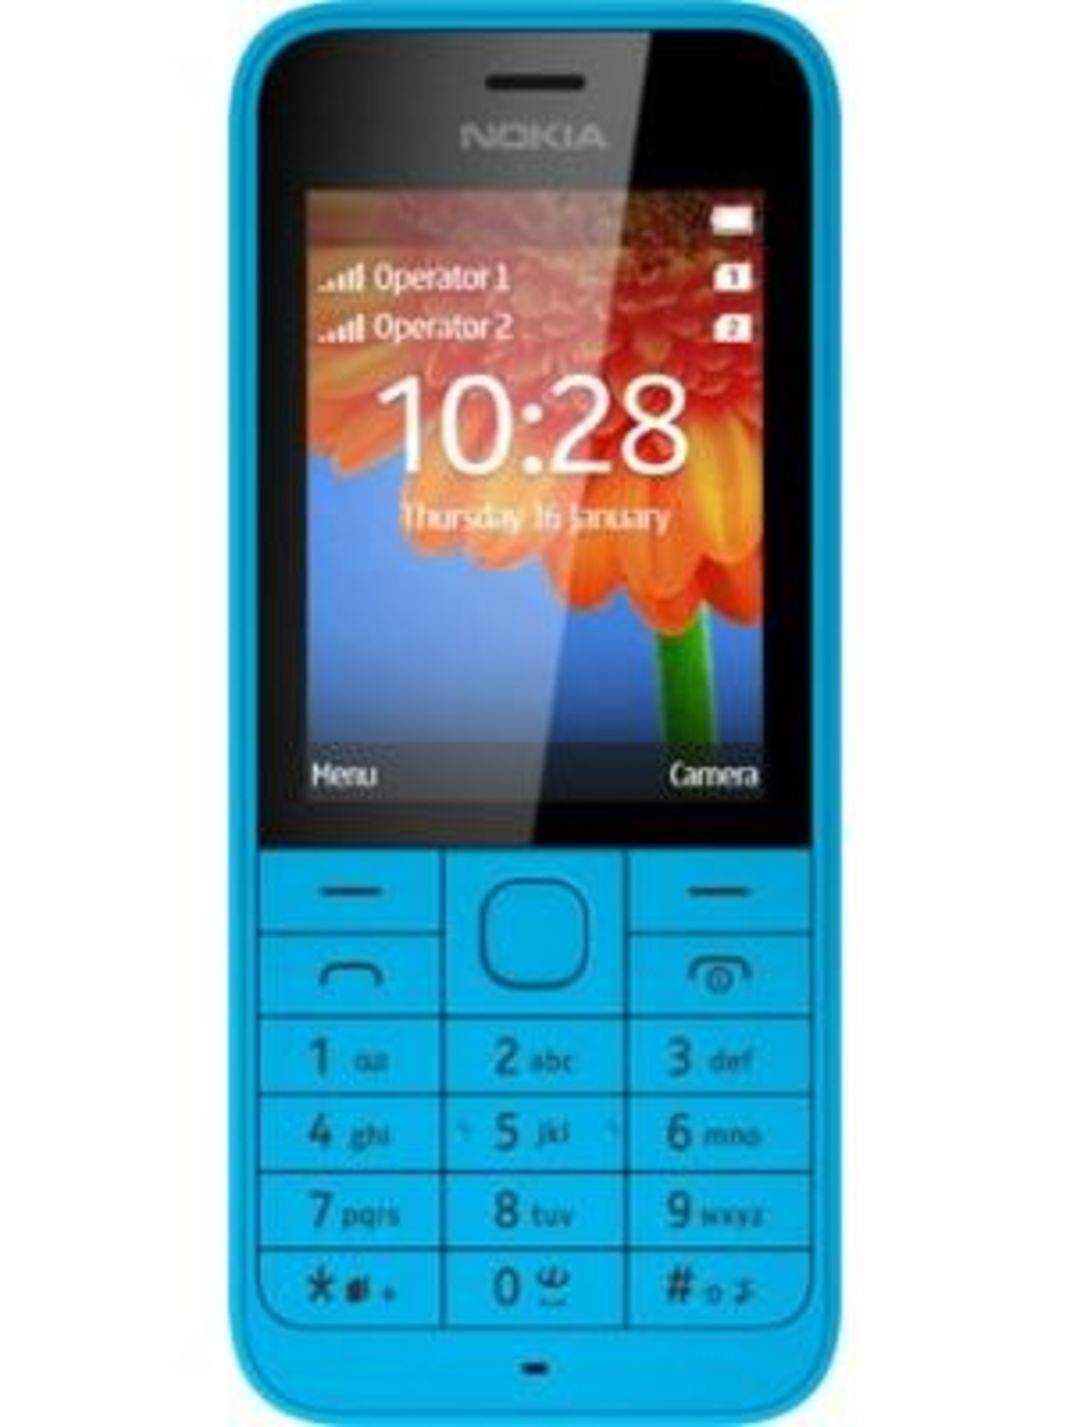 هادئة بشكل مسرف تذمر  Nokia 220 Dual SIM vs Nokia 230 Dual SIM: Compare Specifications, Price |  Gadgets Now